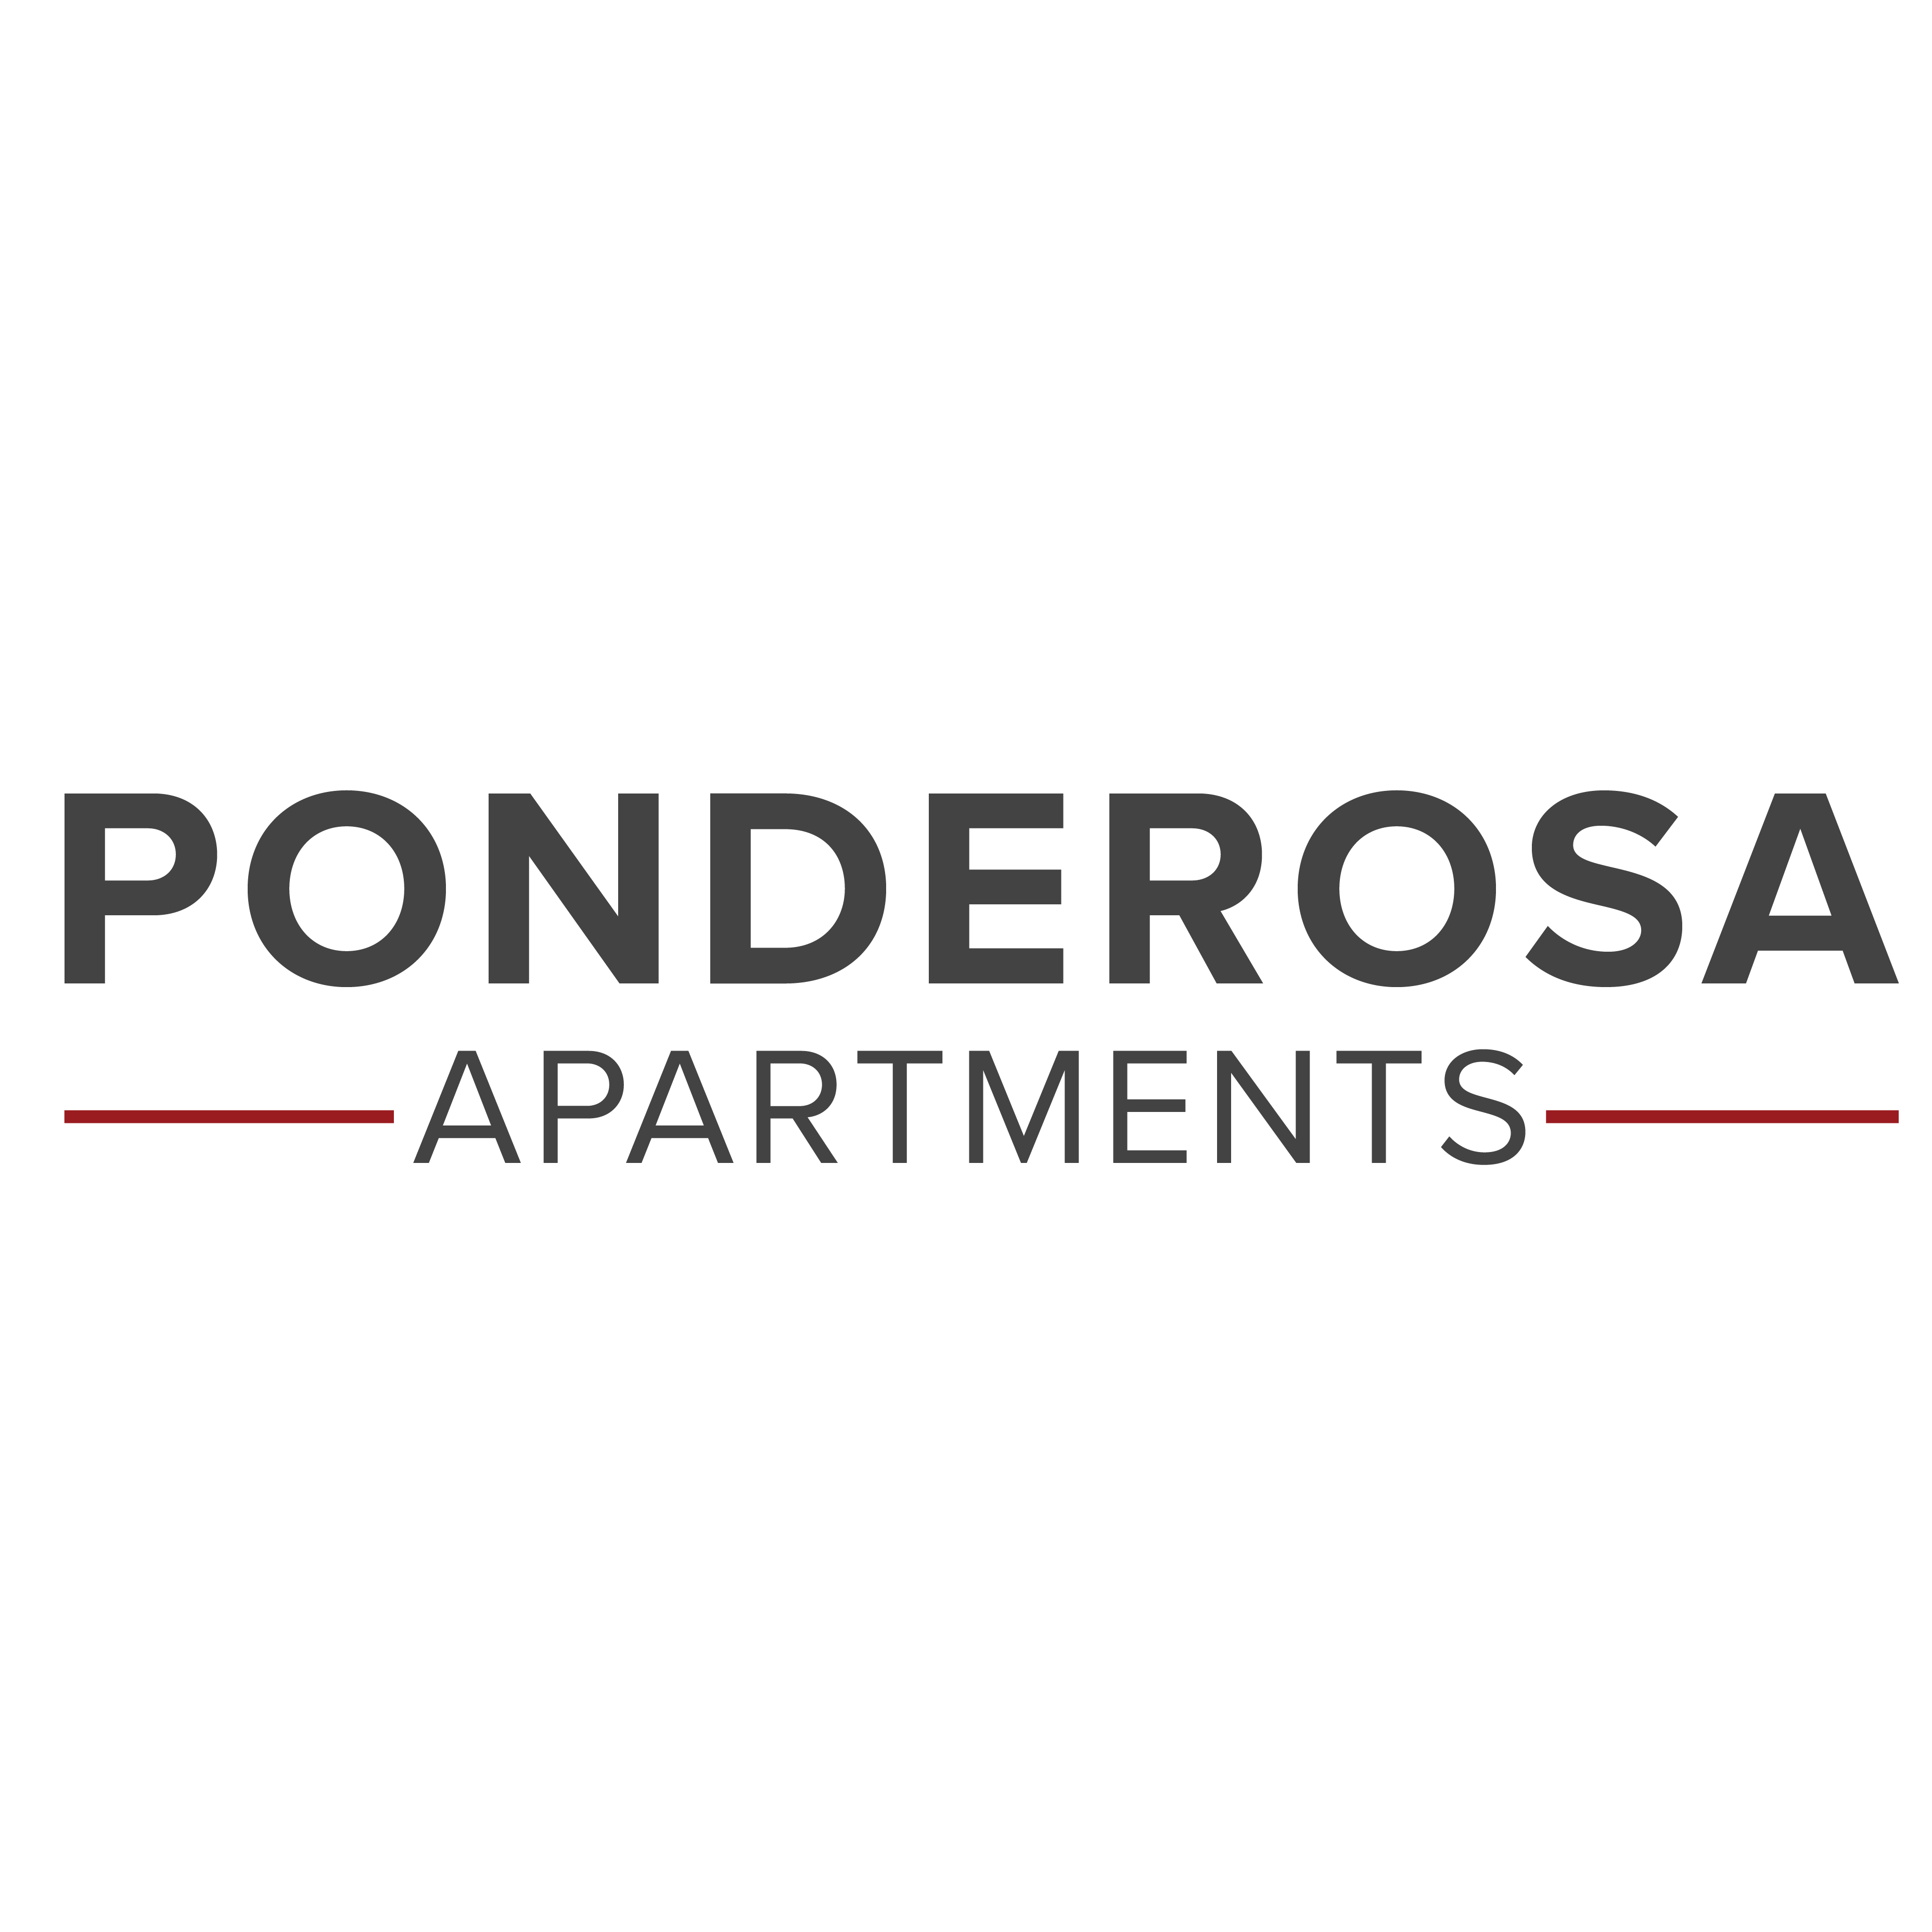 Ponderosa Apartments